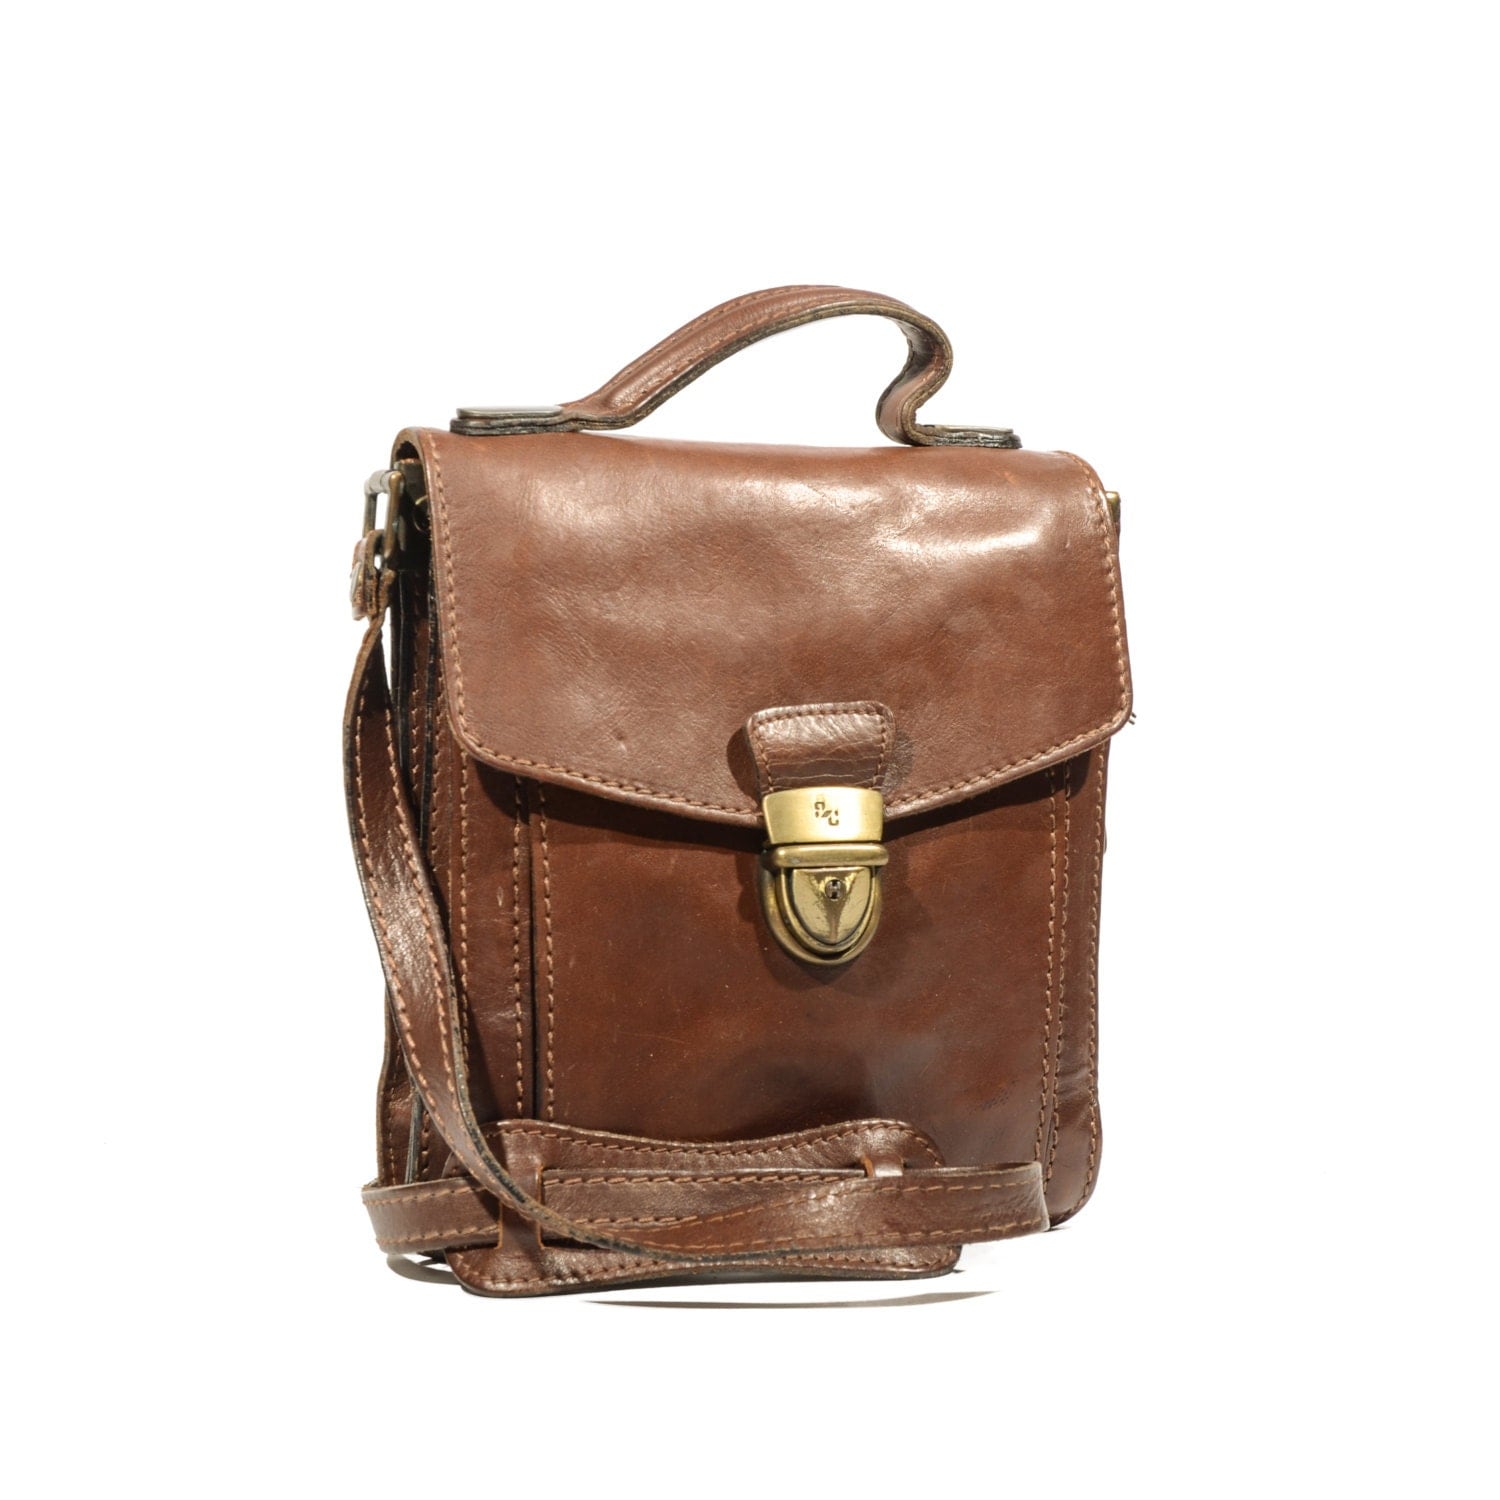 CAGI Pelletterie Brown Leather Shoulder Bag Mini-Messenger Bag